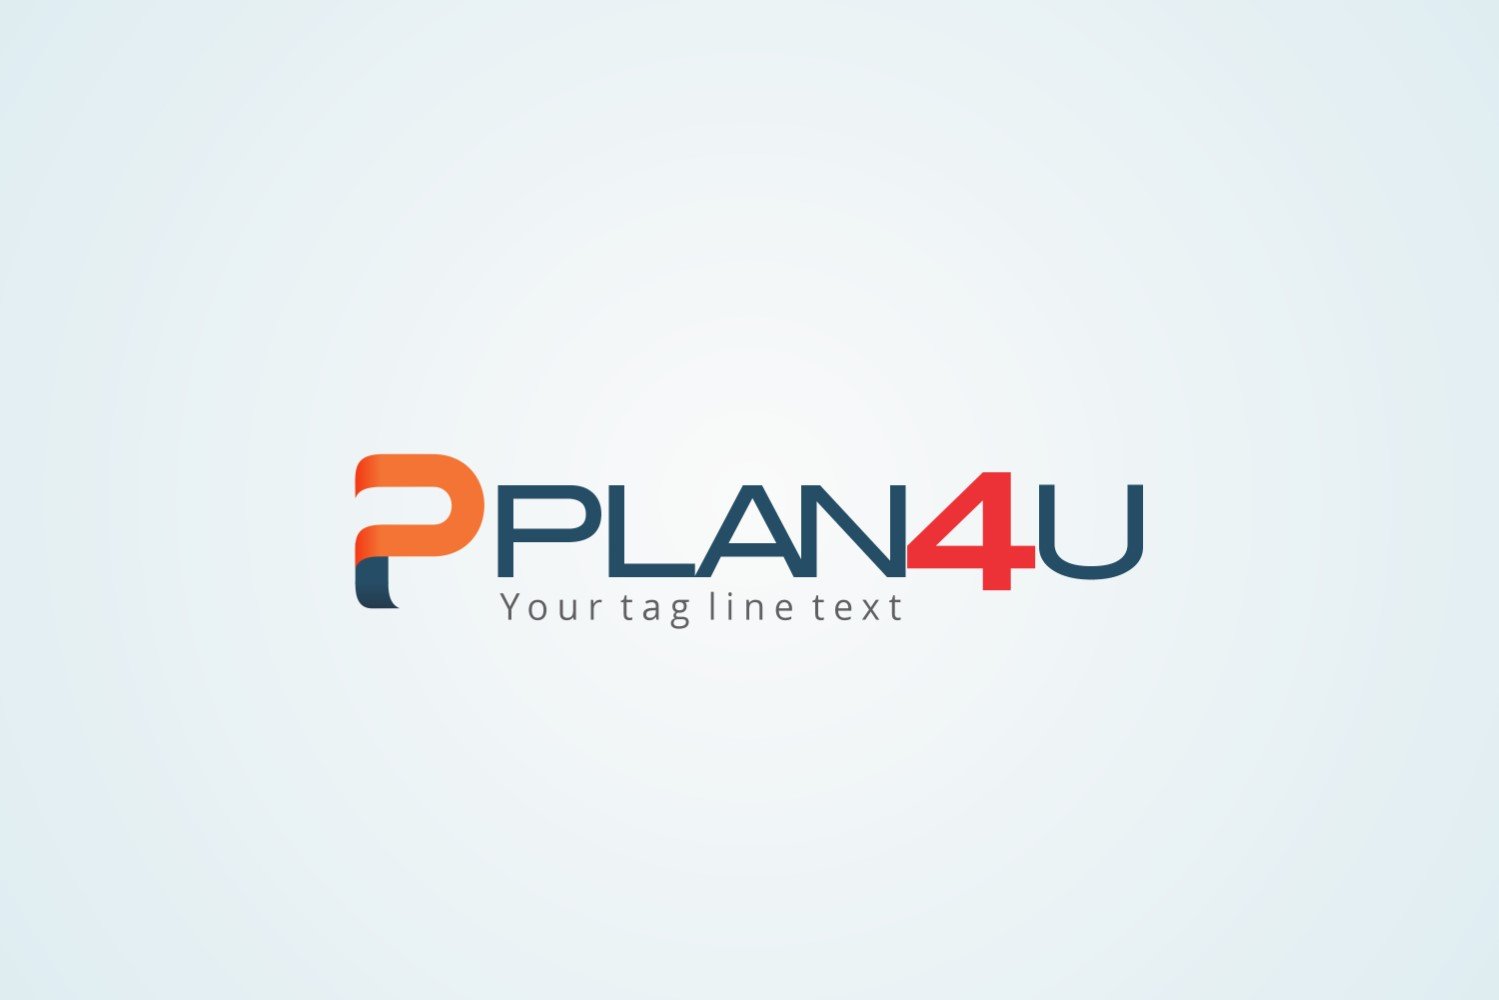 Plan4u Logo Design Template